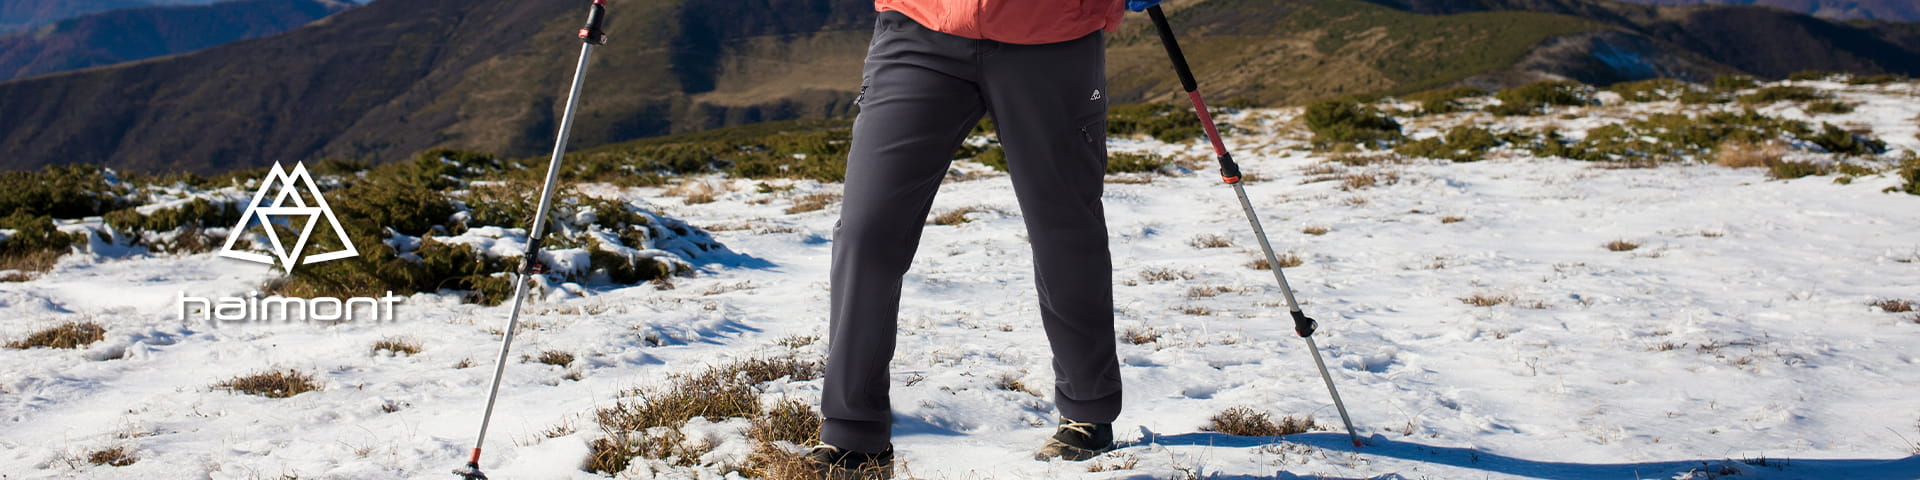 Haimont Women's Hiking and Training Pants: Versatile Comfort